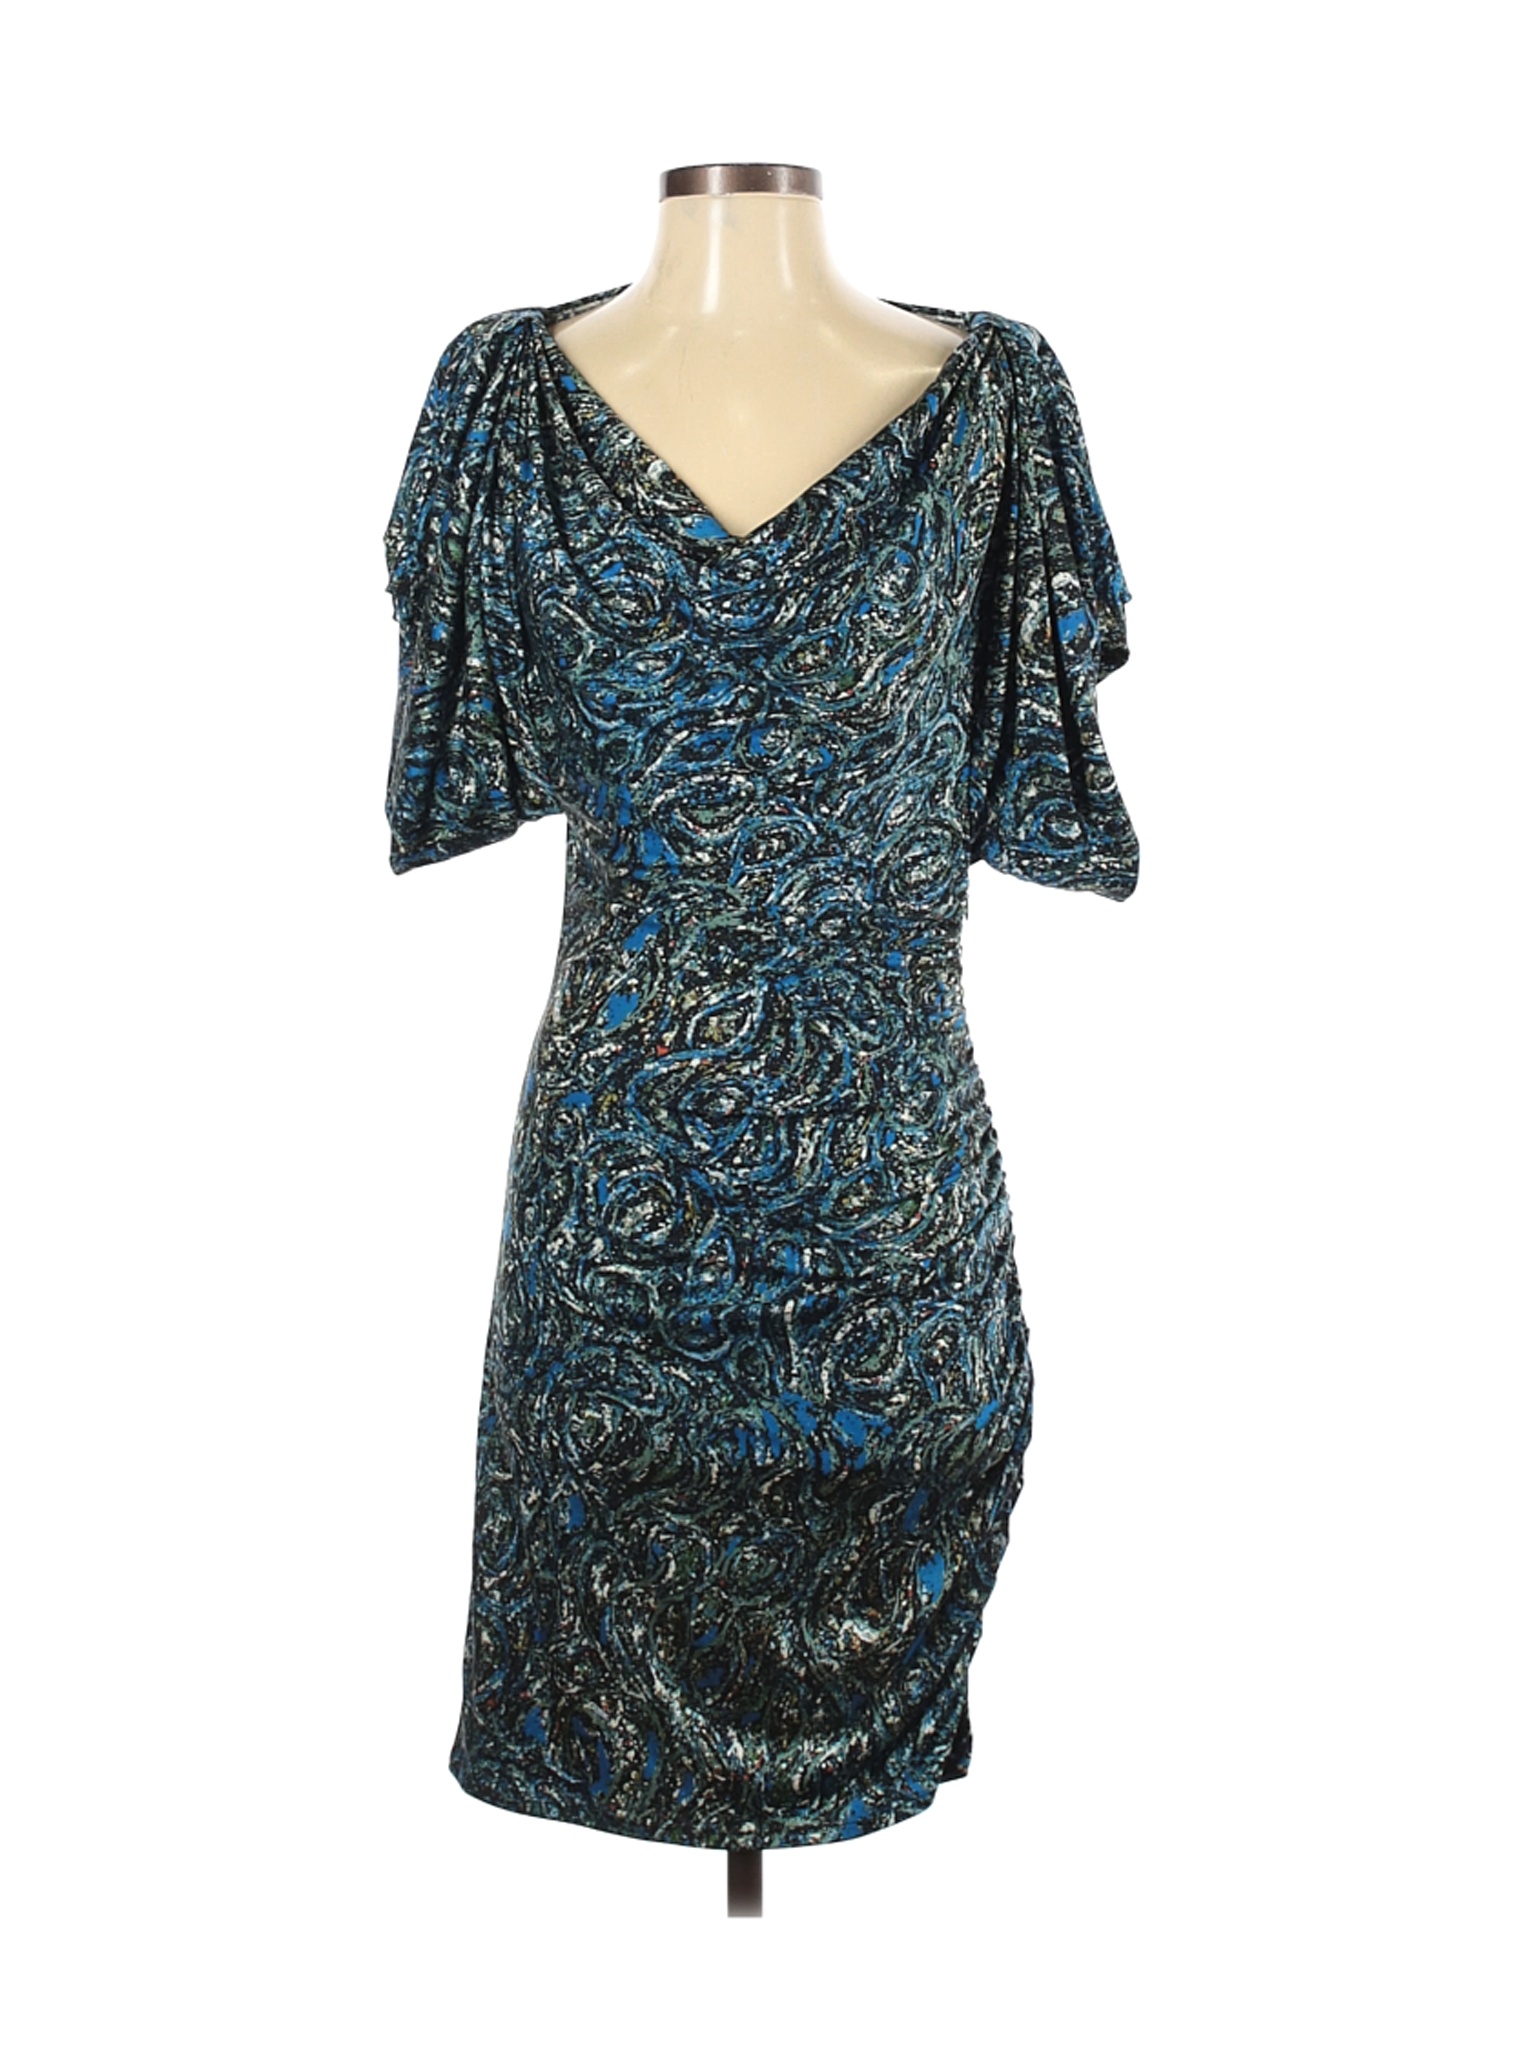 Catherine Malandrino Women Blue Casual Dress S | eBay